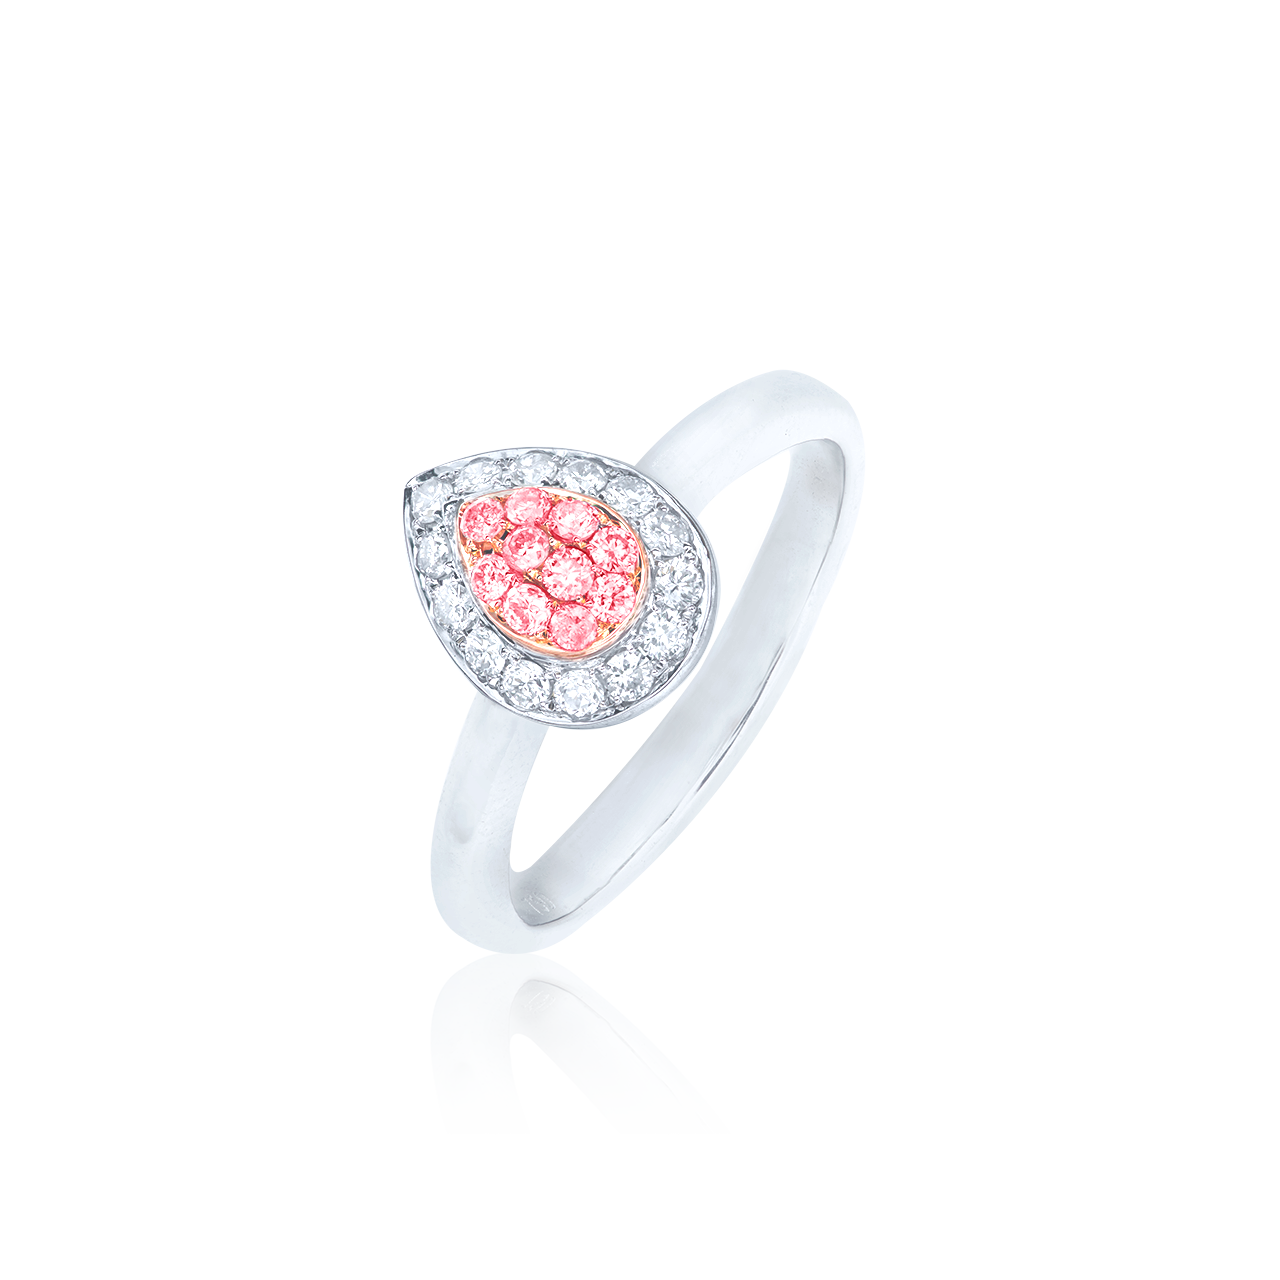 0.135 克拉 粉鑽戒
Pink Colored Diamond and Diamond Ring